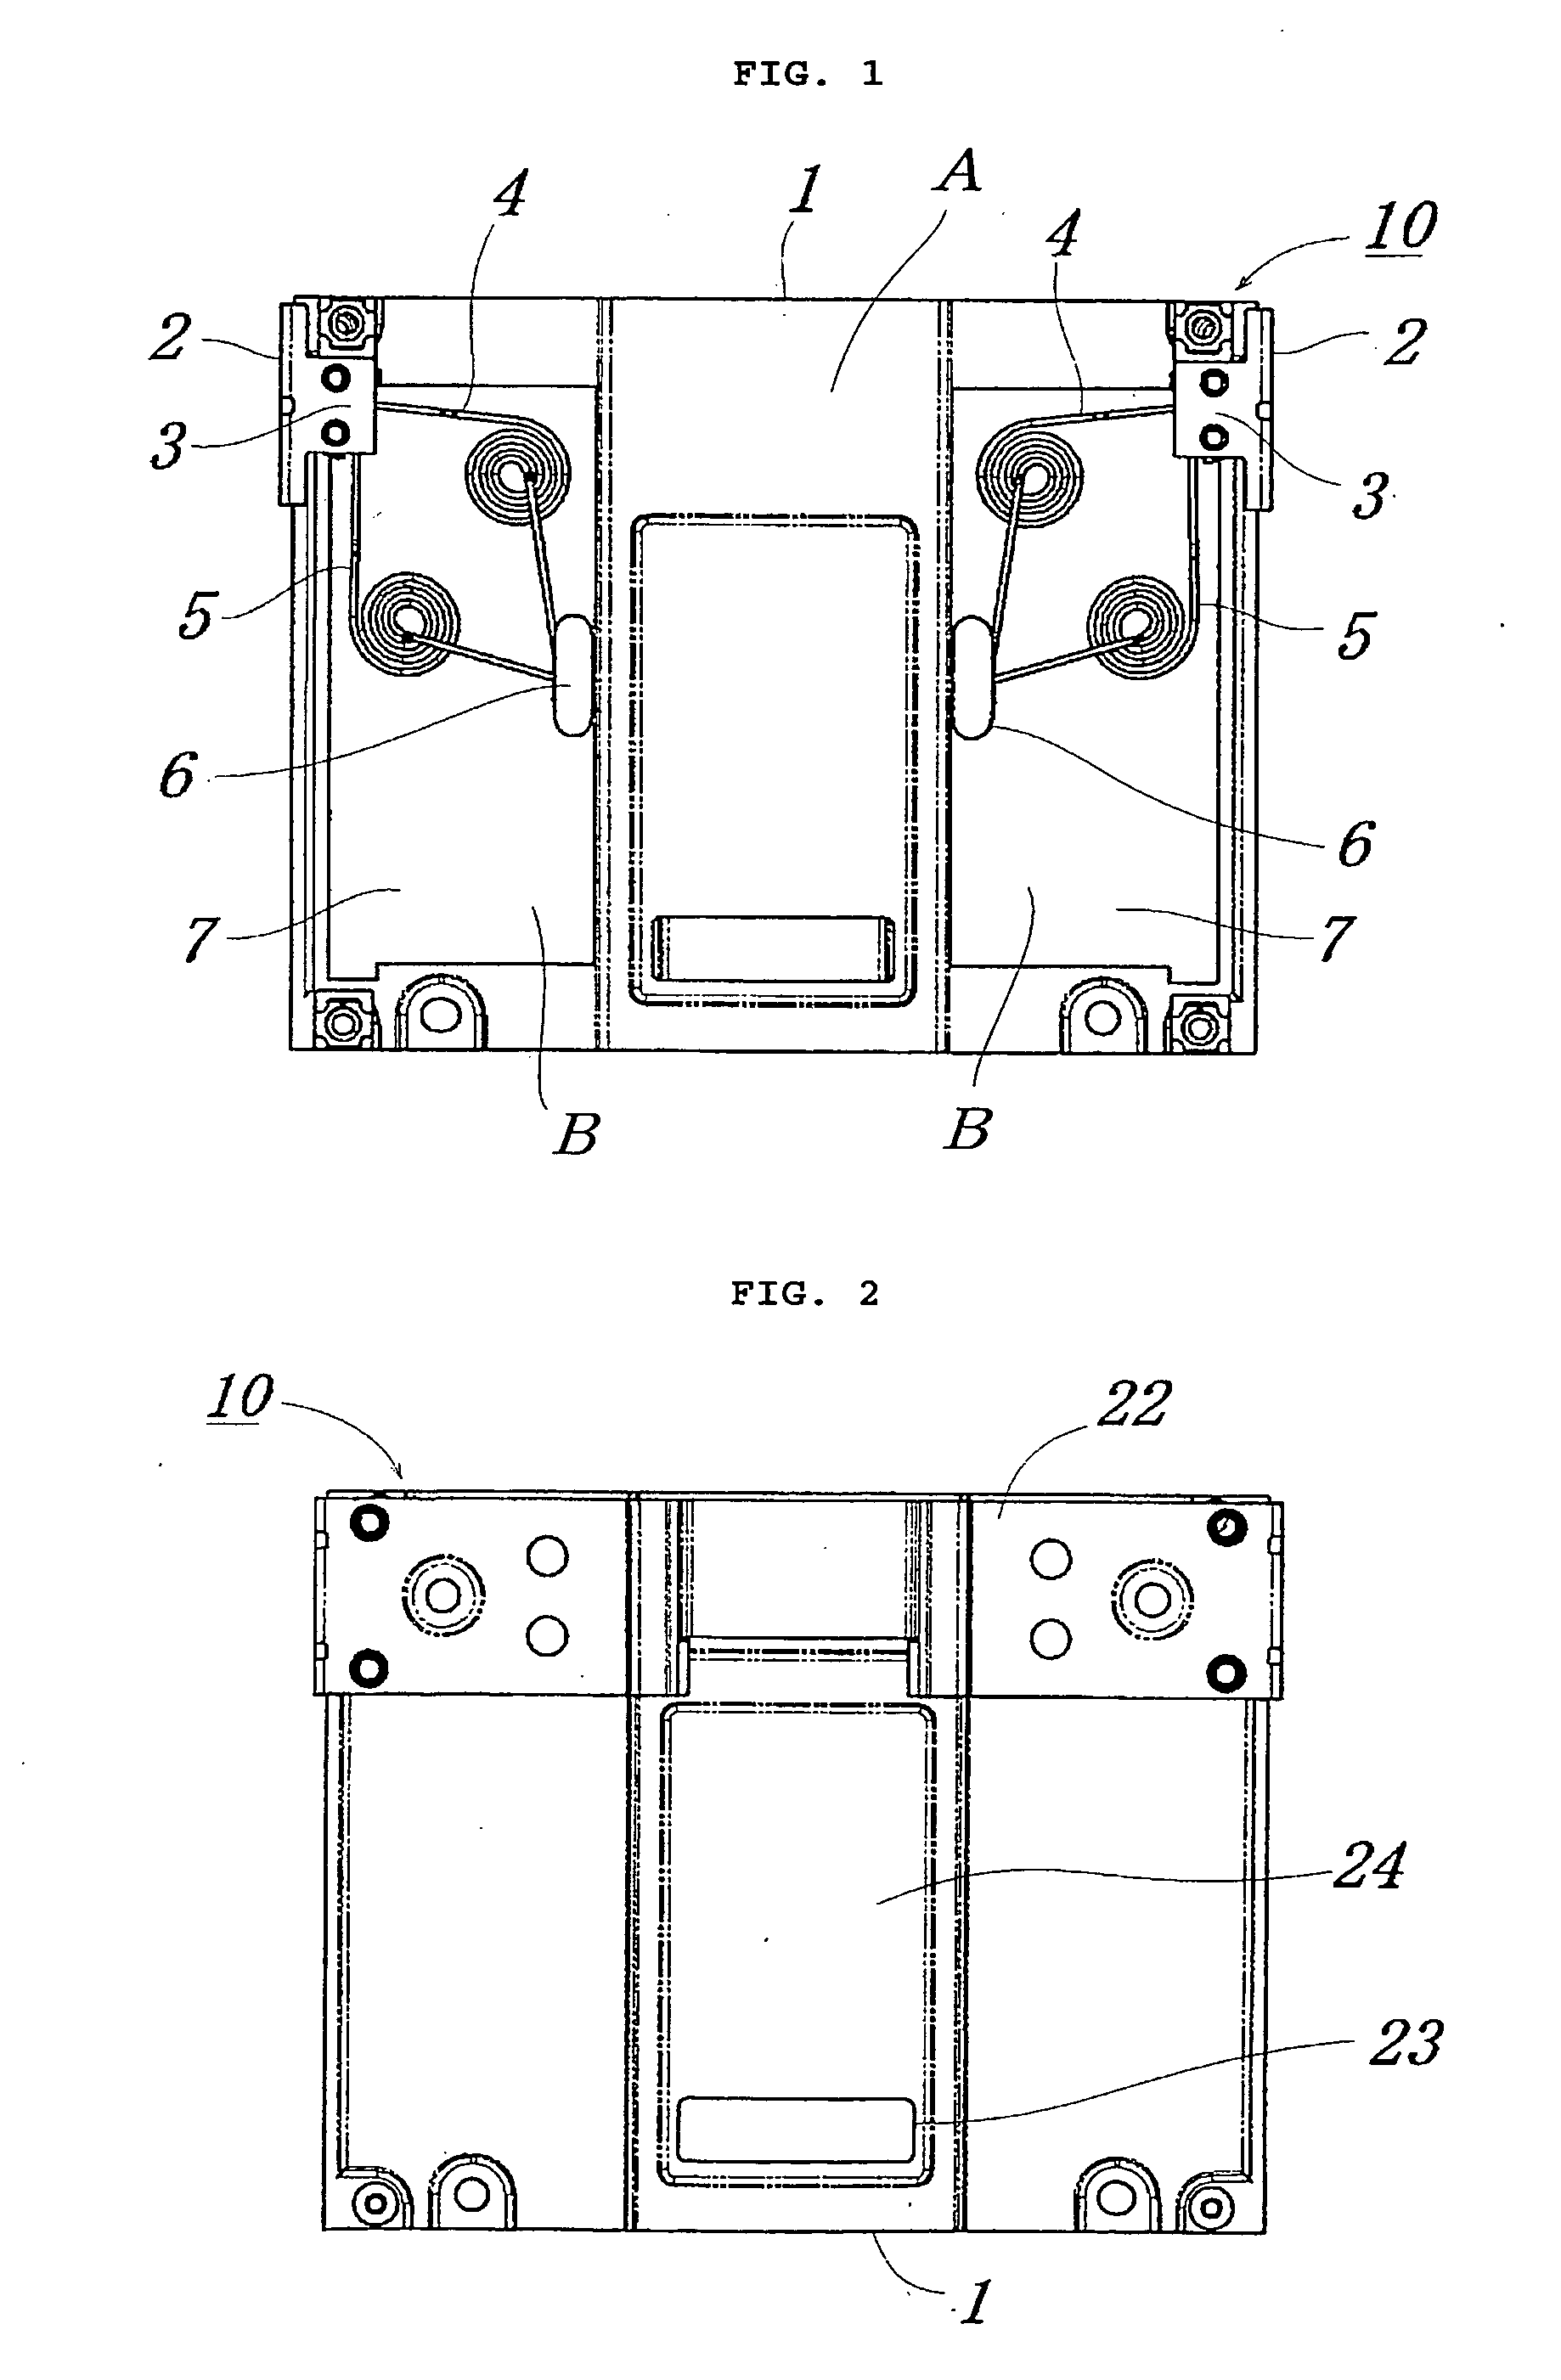 Slide unit mechanism